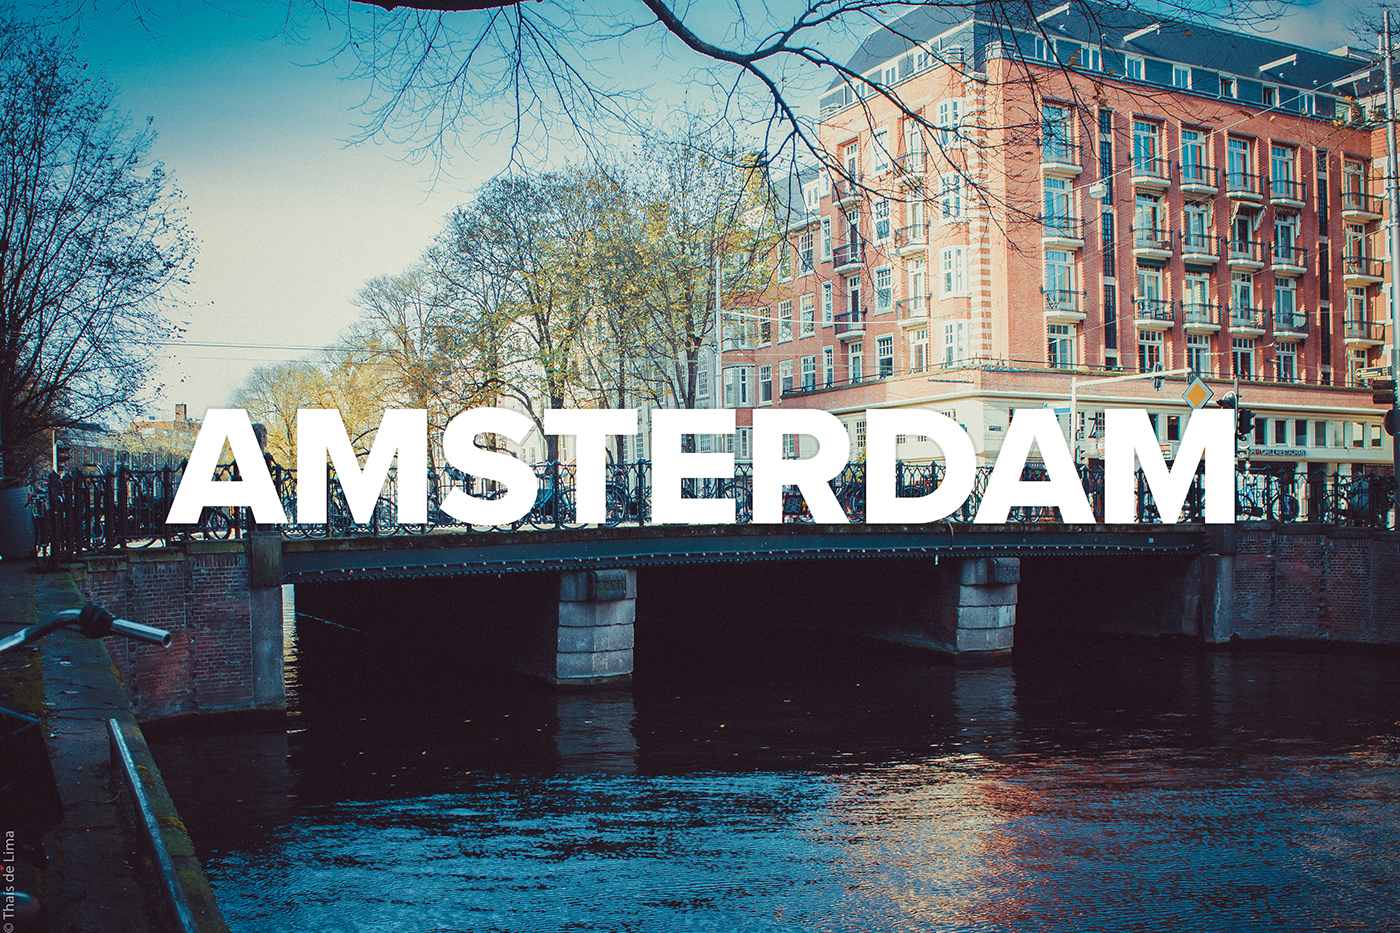 Amstersdam - photograph album on Behance